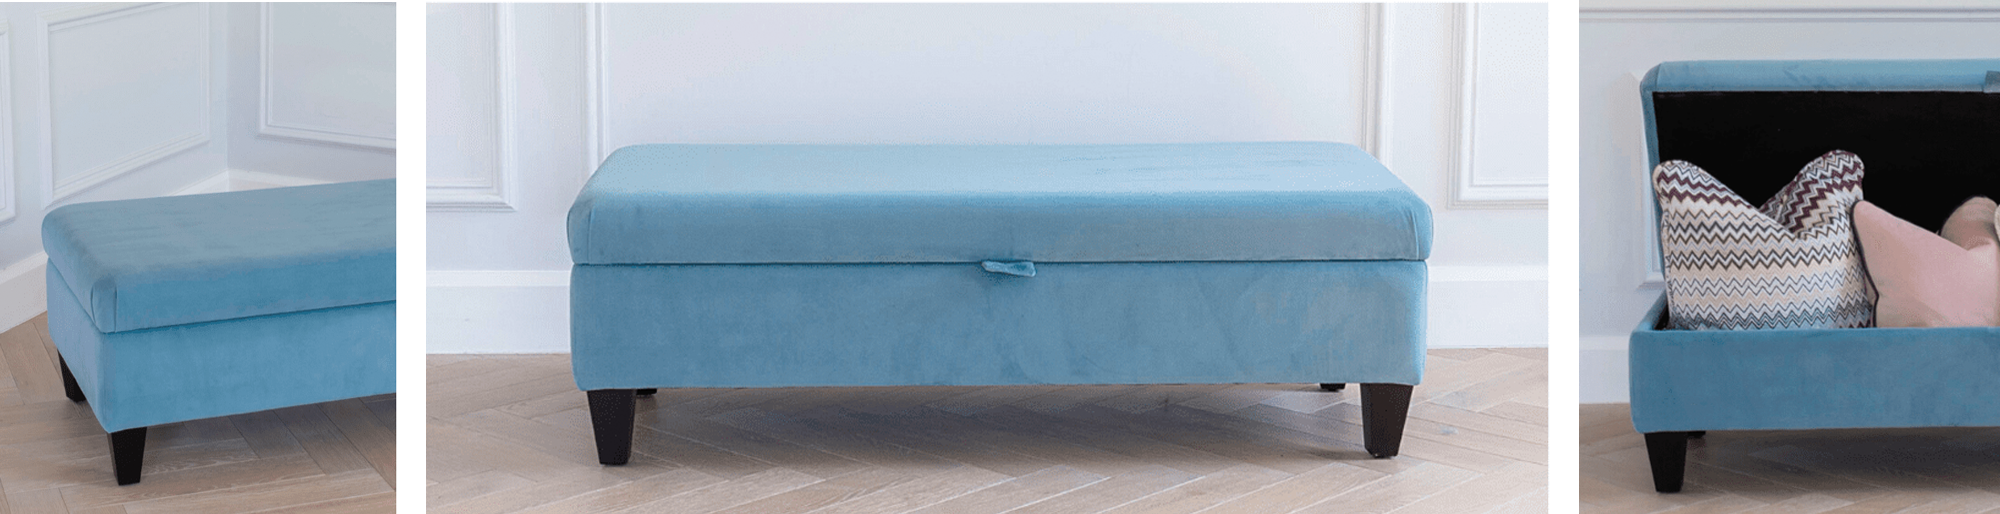 Ottolong Storage Bench Blue